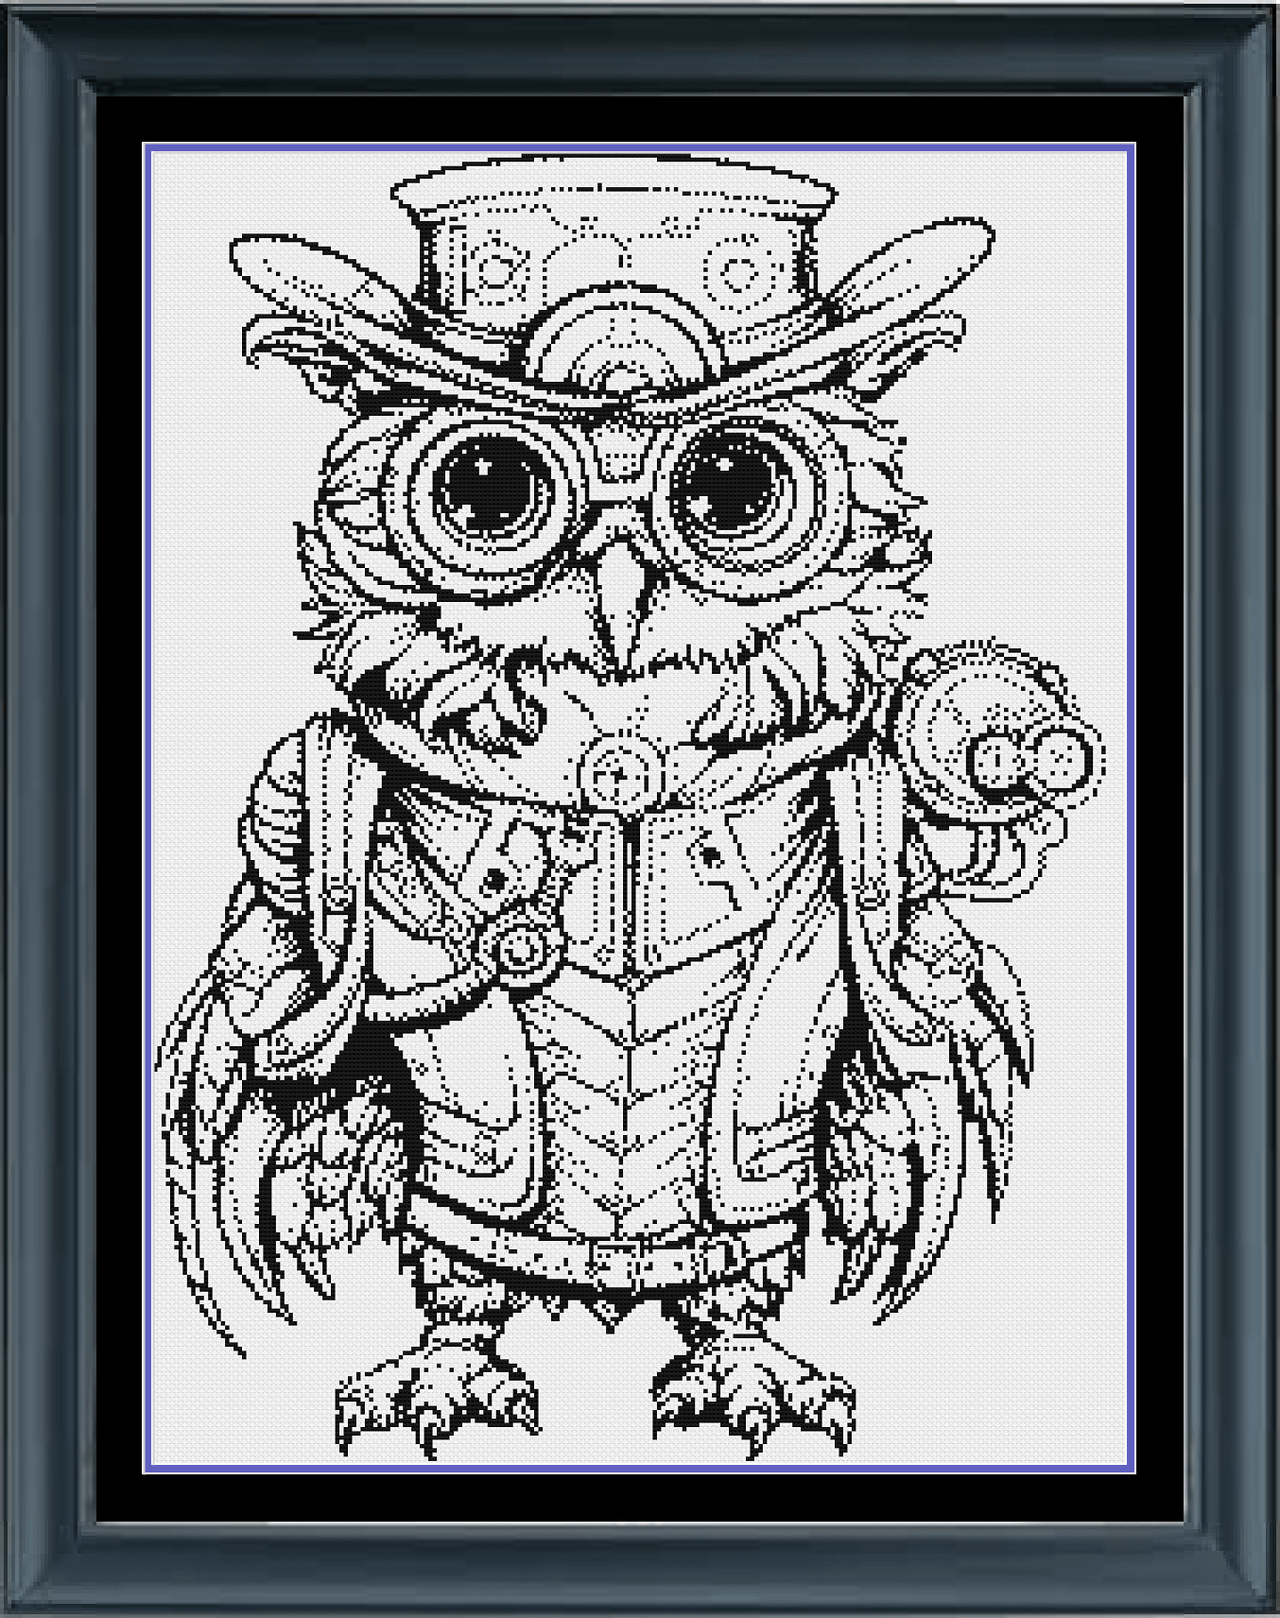 Stitching Jules Design Cross Stitch Pattern Steampunk Monochrome Owl Counted Cross Stitch Pattern | Instant Download PDF